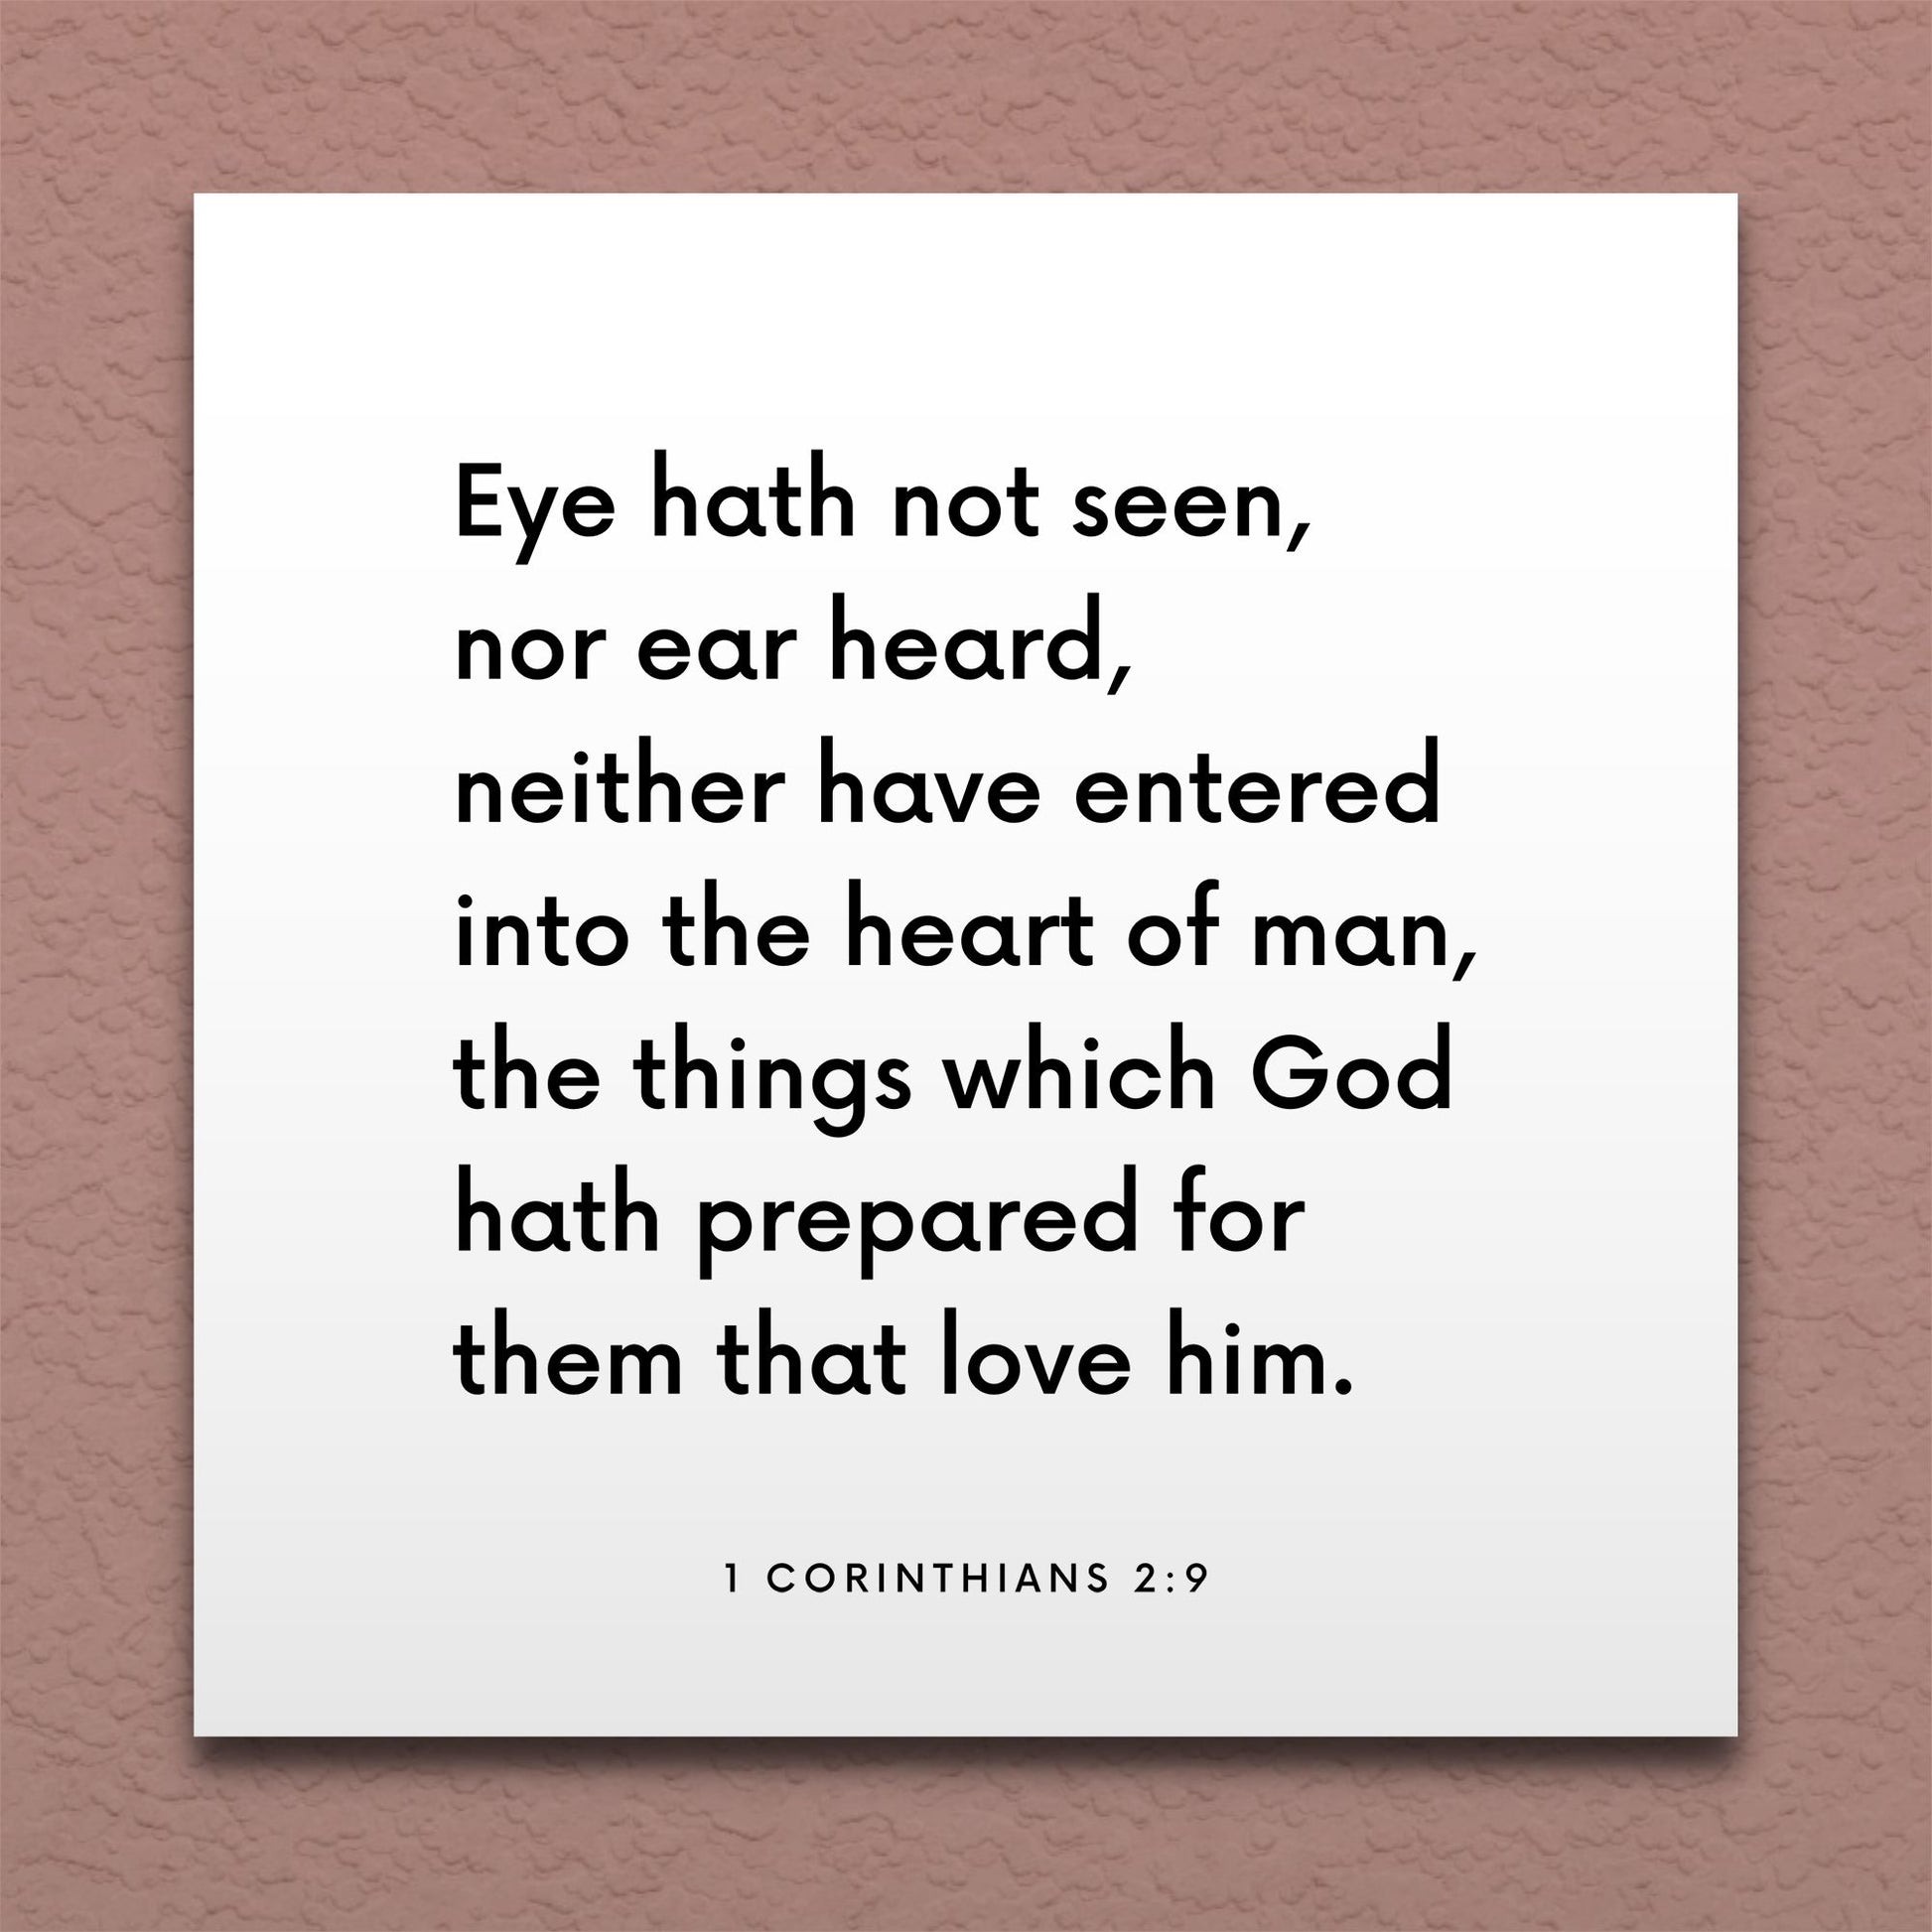 Wall-mounted scripture tile for 1 Corinthians 2:9 - "Eye hath not seen, nor ear heard"